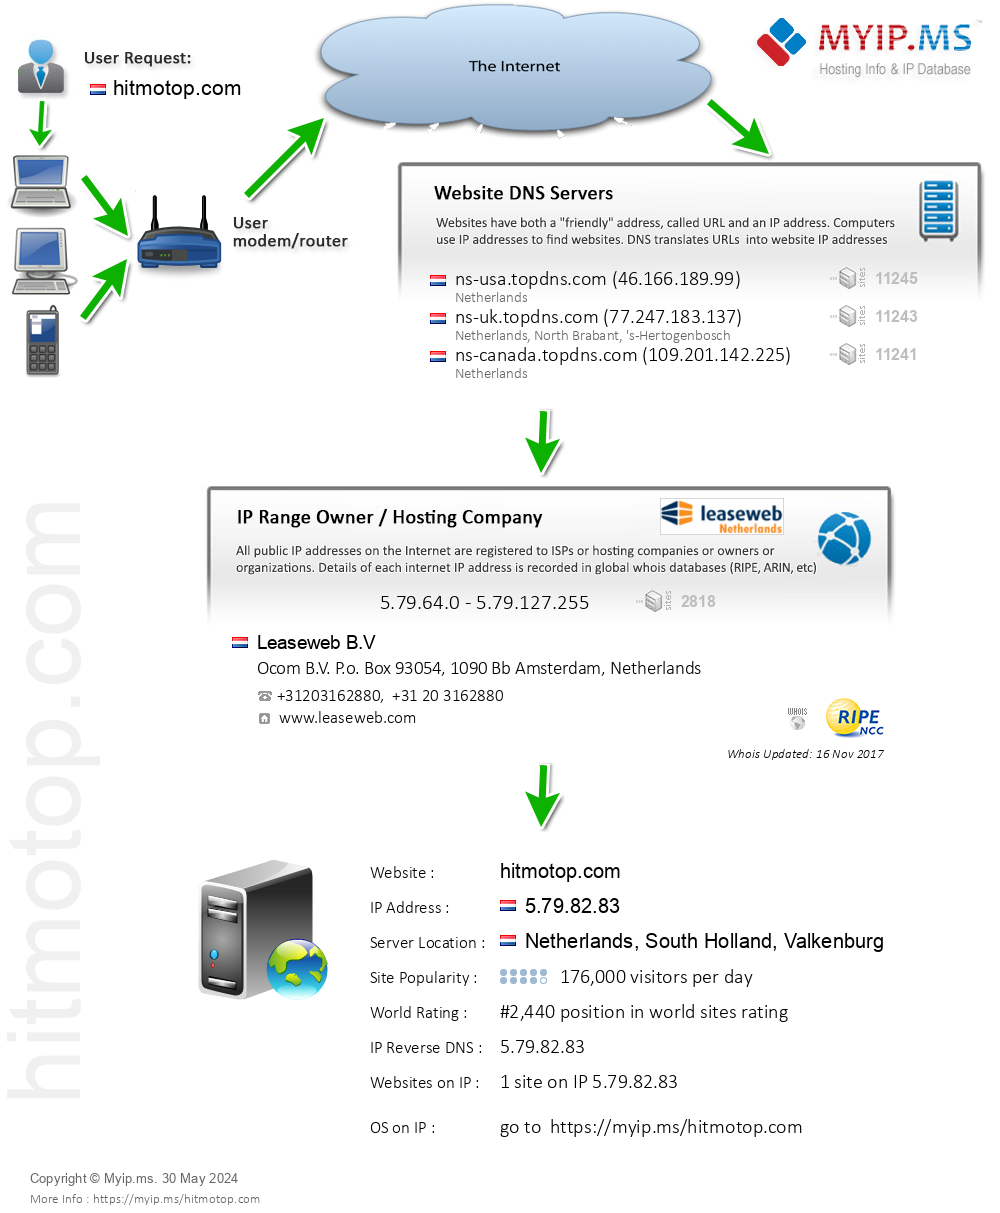 Hitmotop.com - Website Hosting Visual IP Diagram